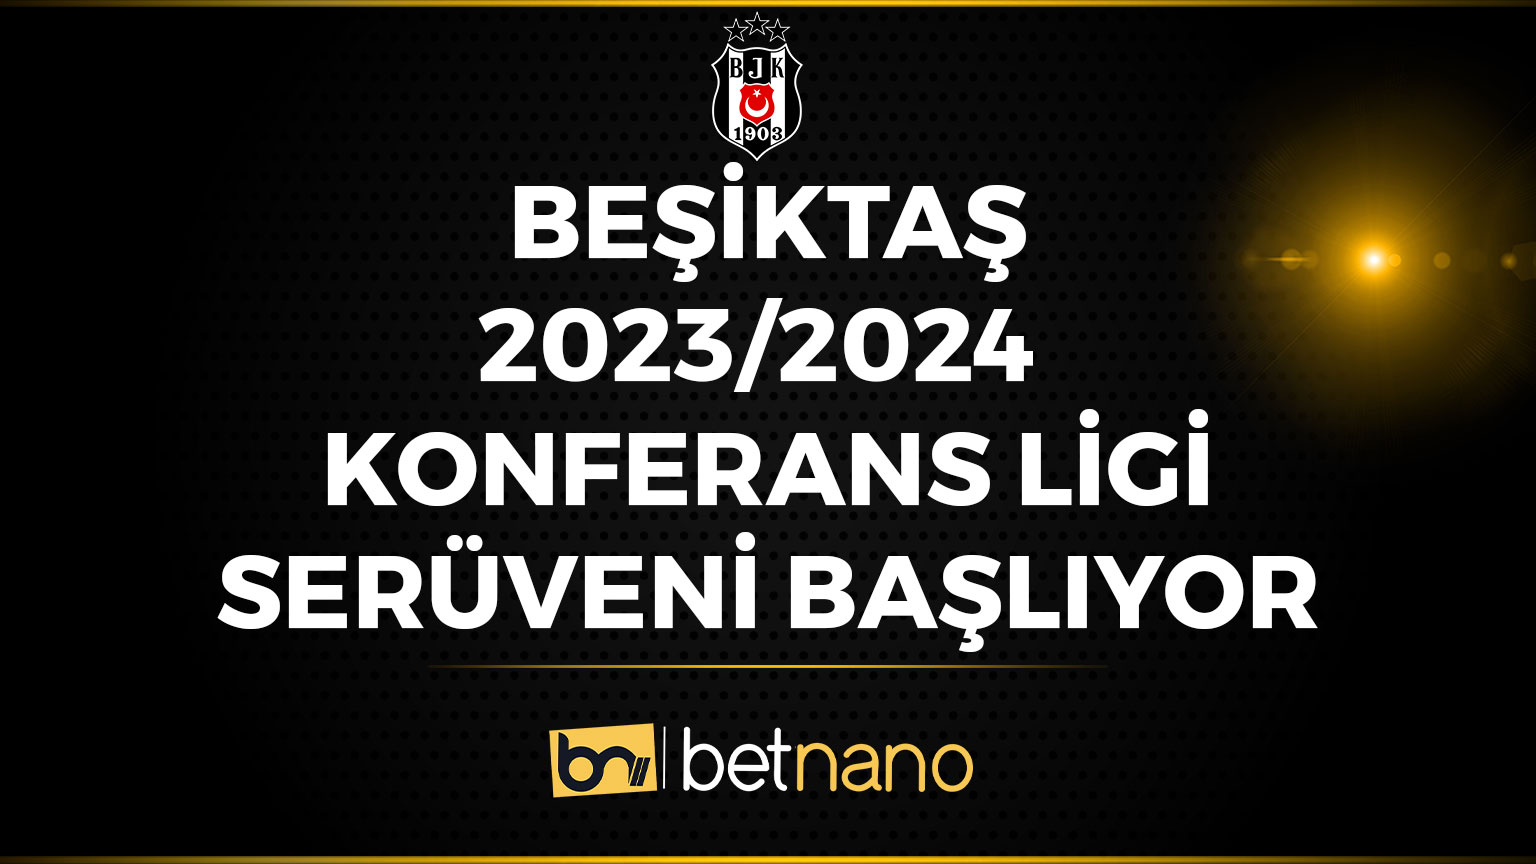 Beşiktaş 2023-2024 Konferans Ligi Serüveni Başlıyor!